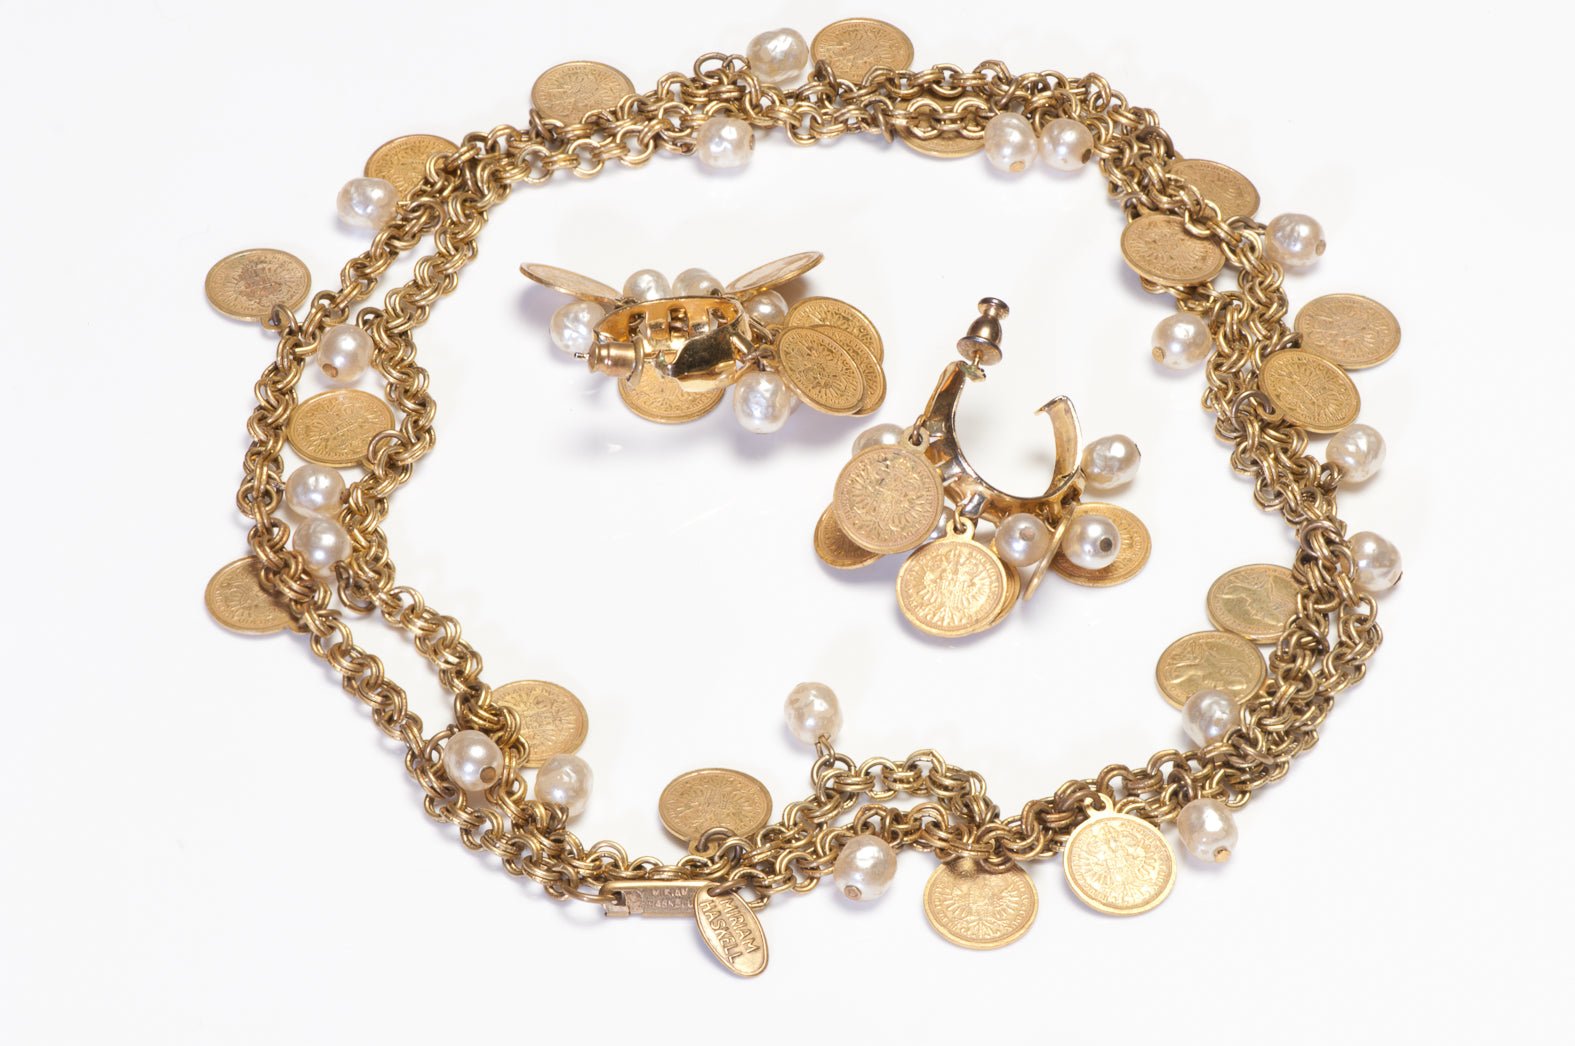 Vintage Miriam Haskell 1870 Maria Theresa Coin Pearl Necklace Hoop Earrings Set